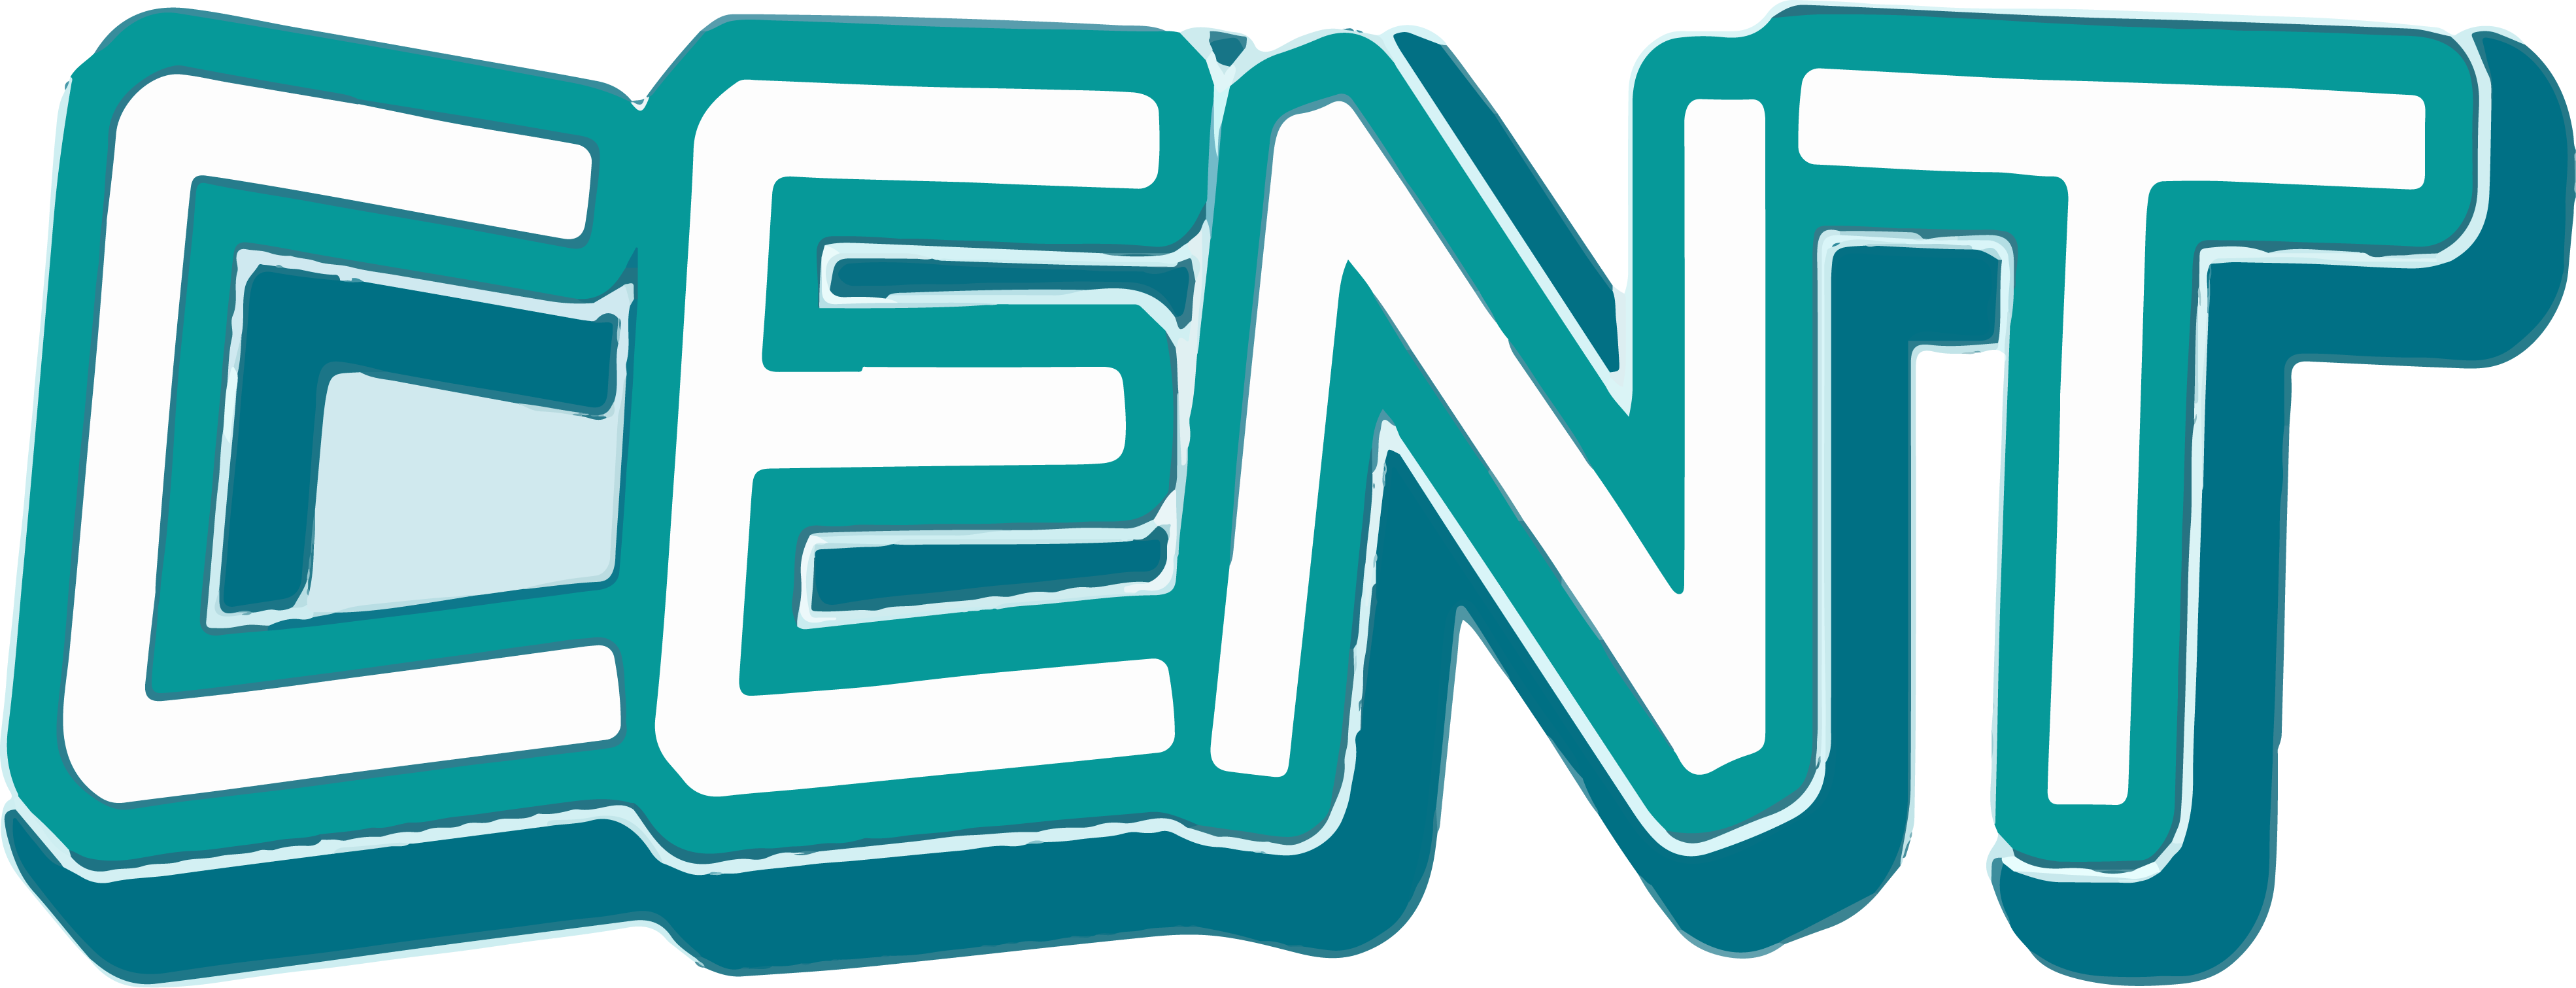 CENT logo(new)4